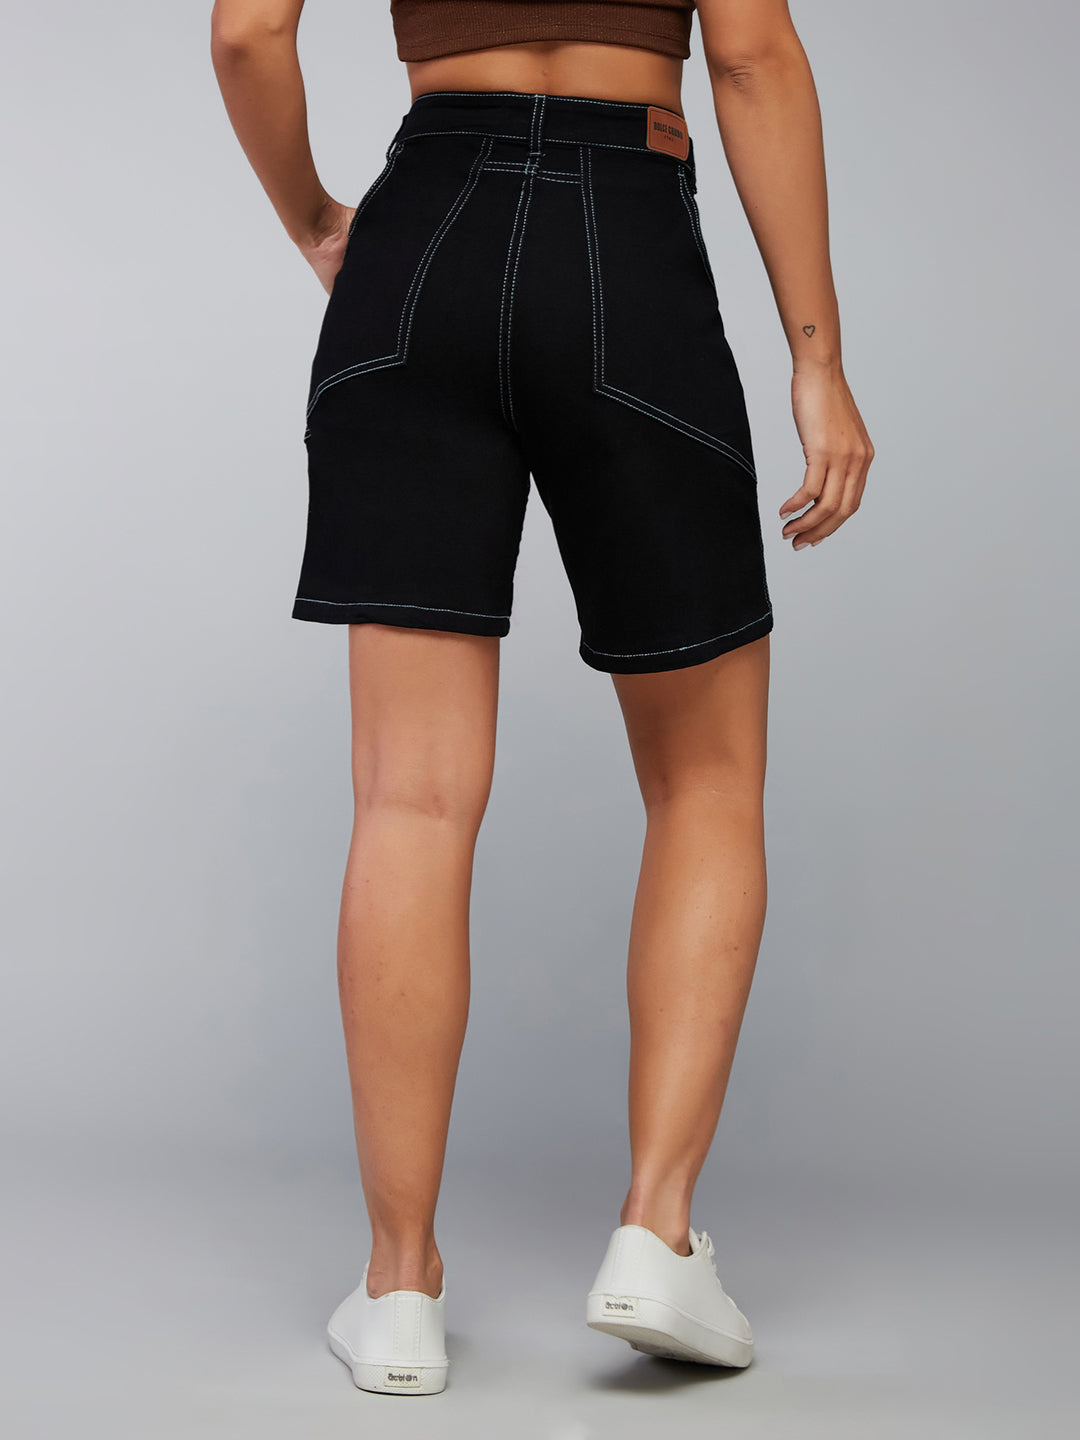 Women's Black Regular High Rise Clean Look Above Knee Stretchable Denim Shorts